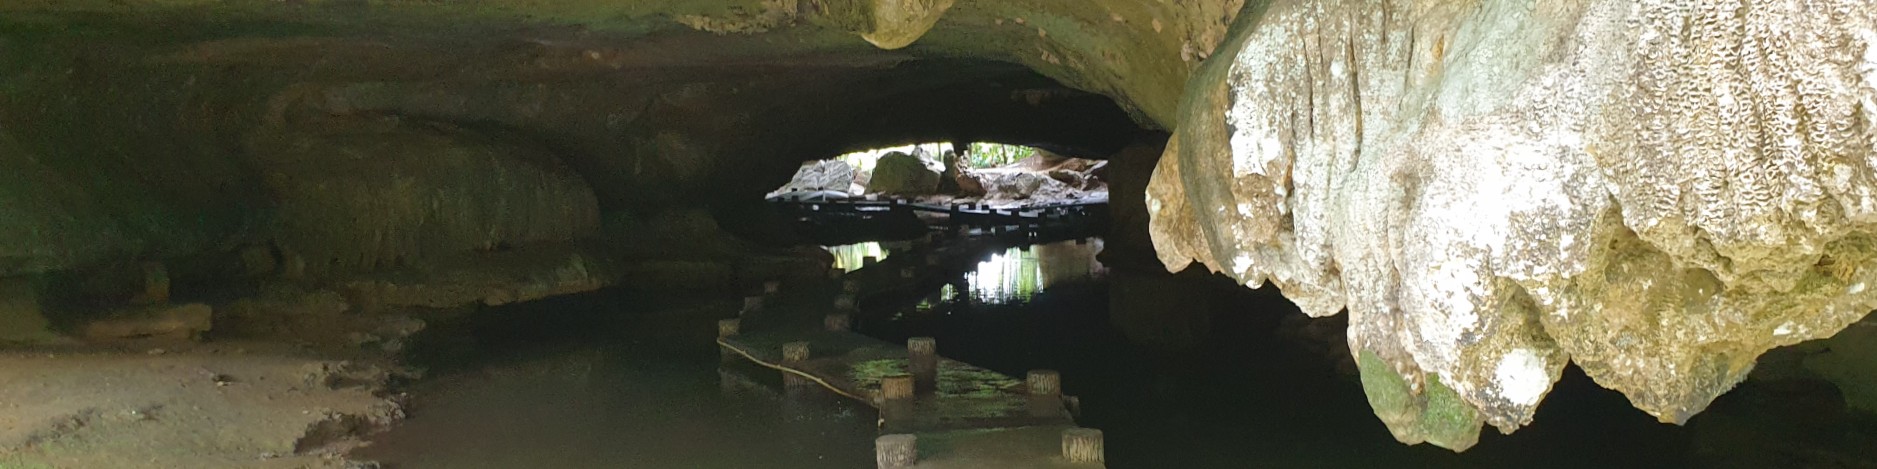 Urai Thong Cave, La-ngu District, Satun Province